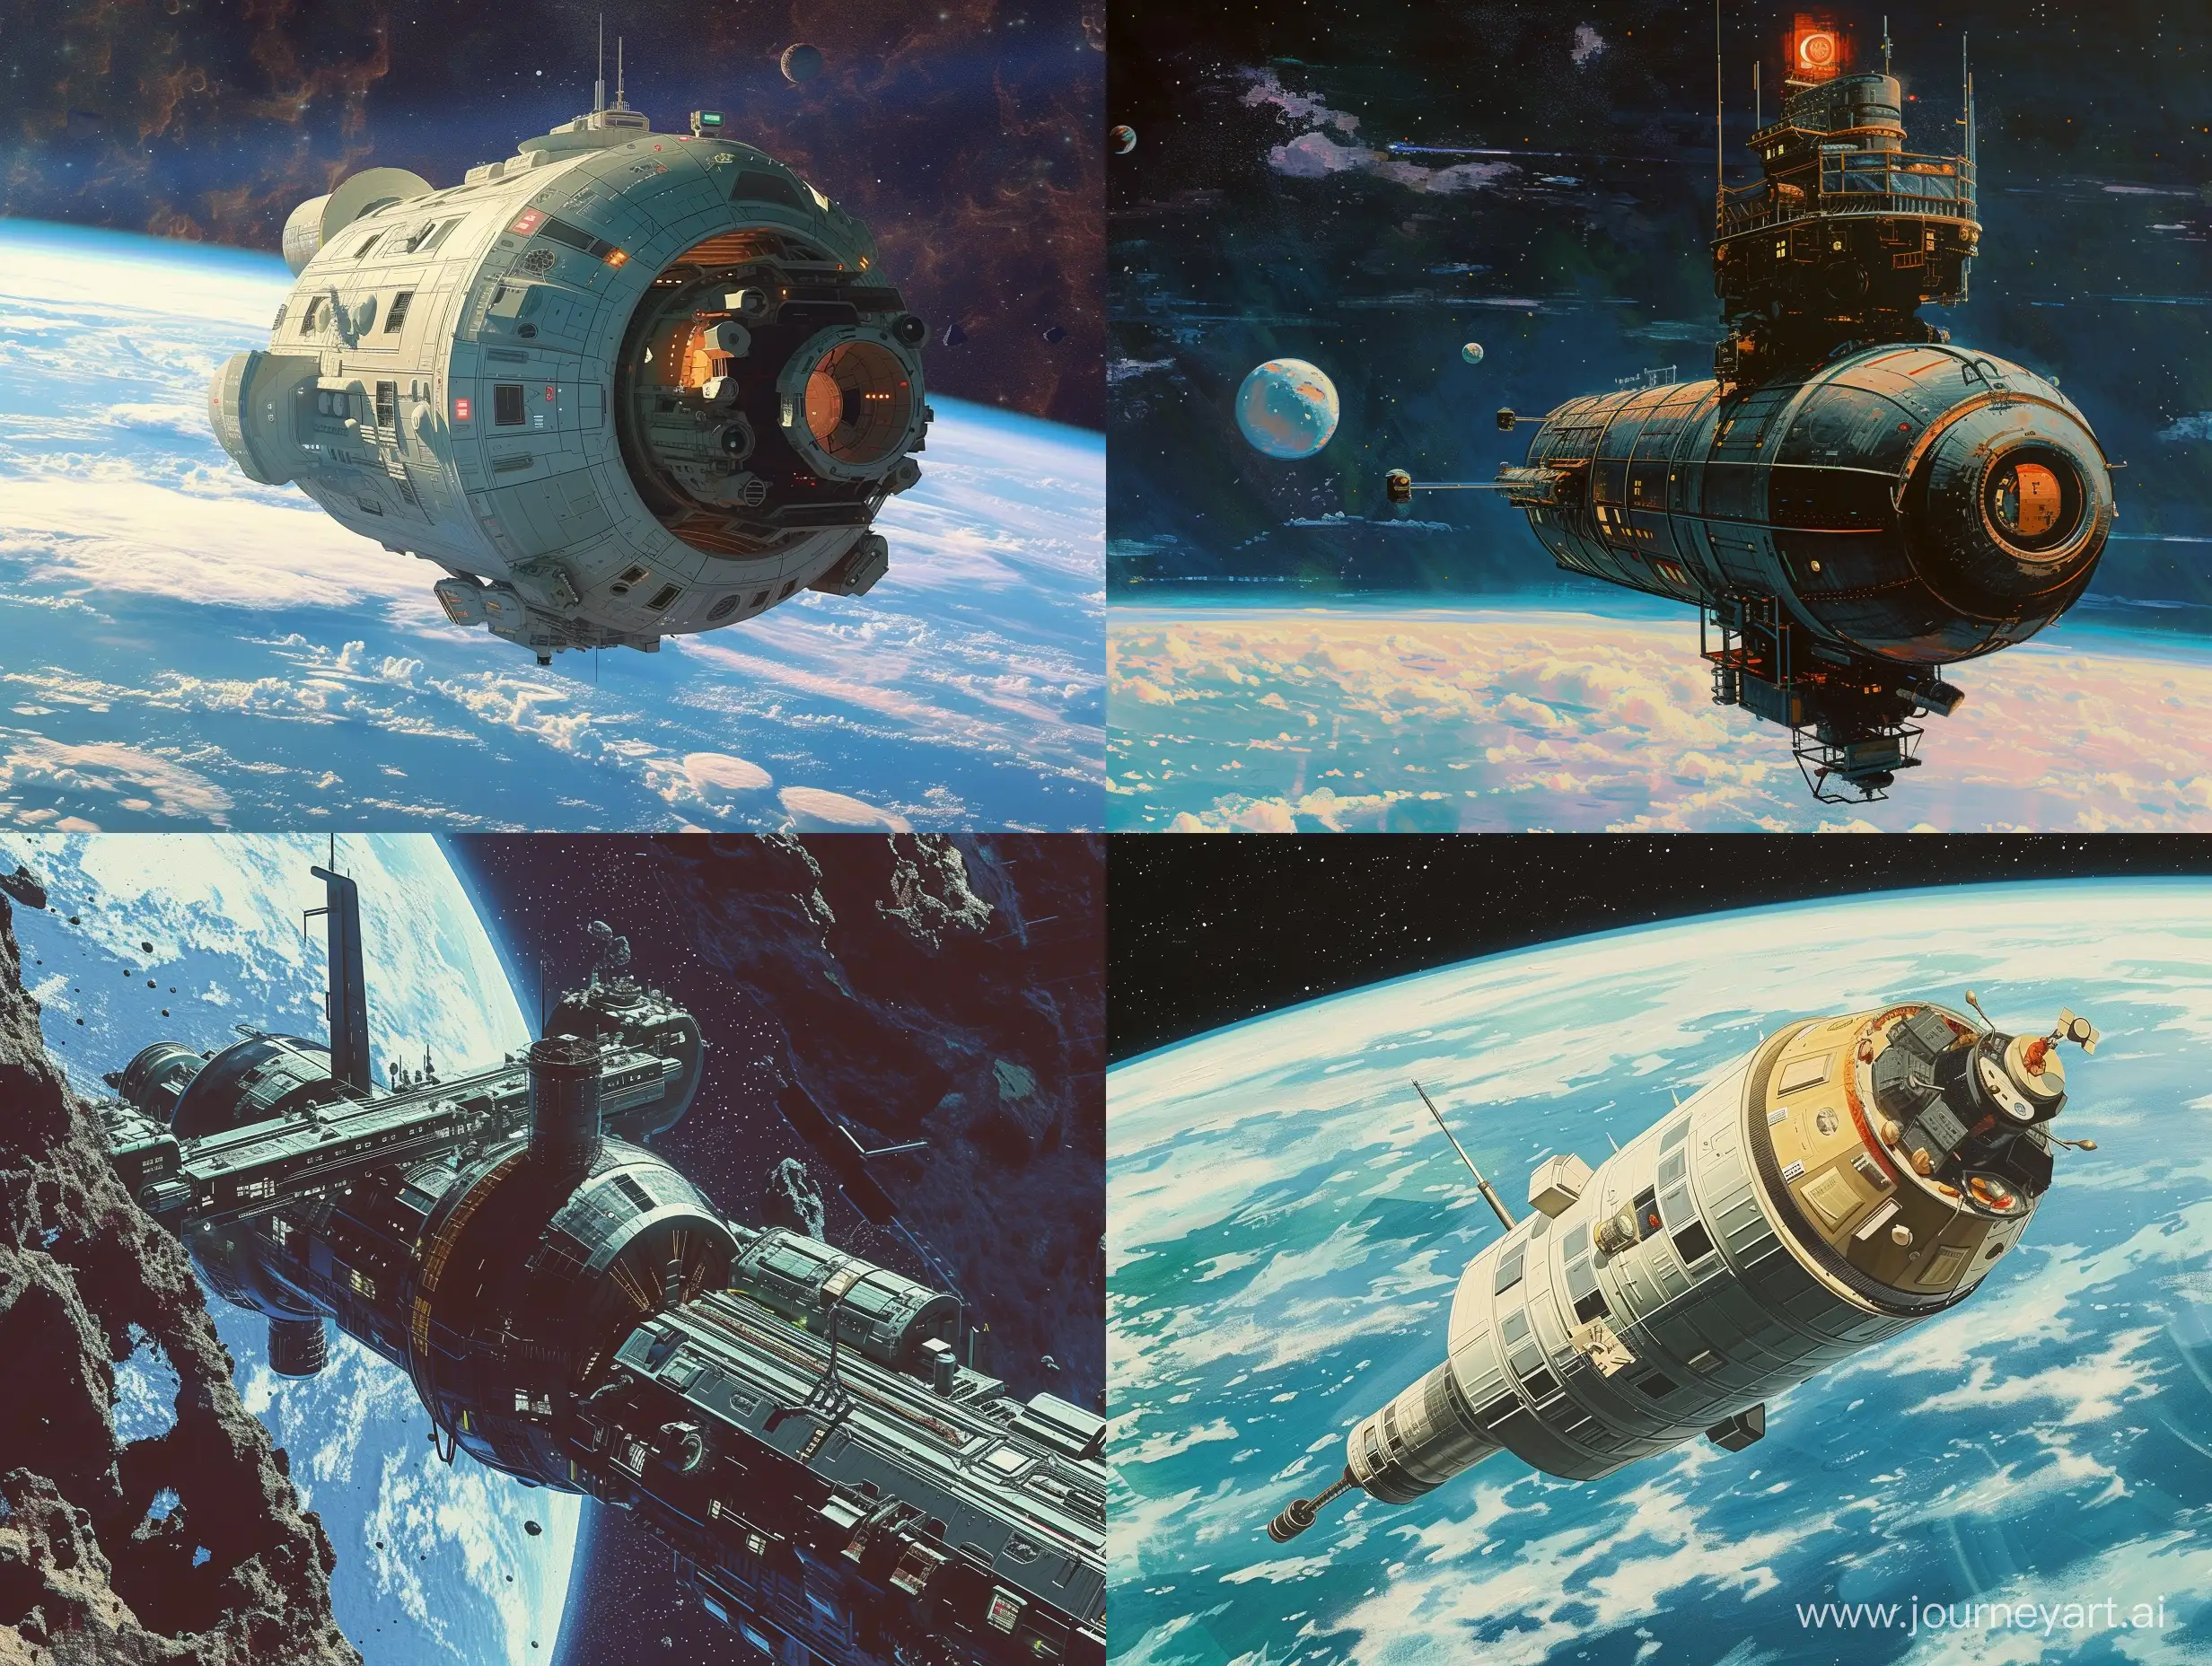 RetroFuturistic-Space-Station-in-80s-Vibes-Artwork